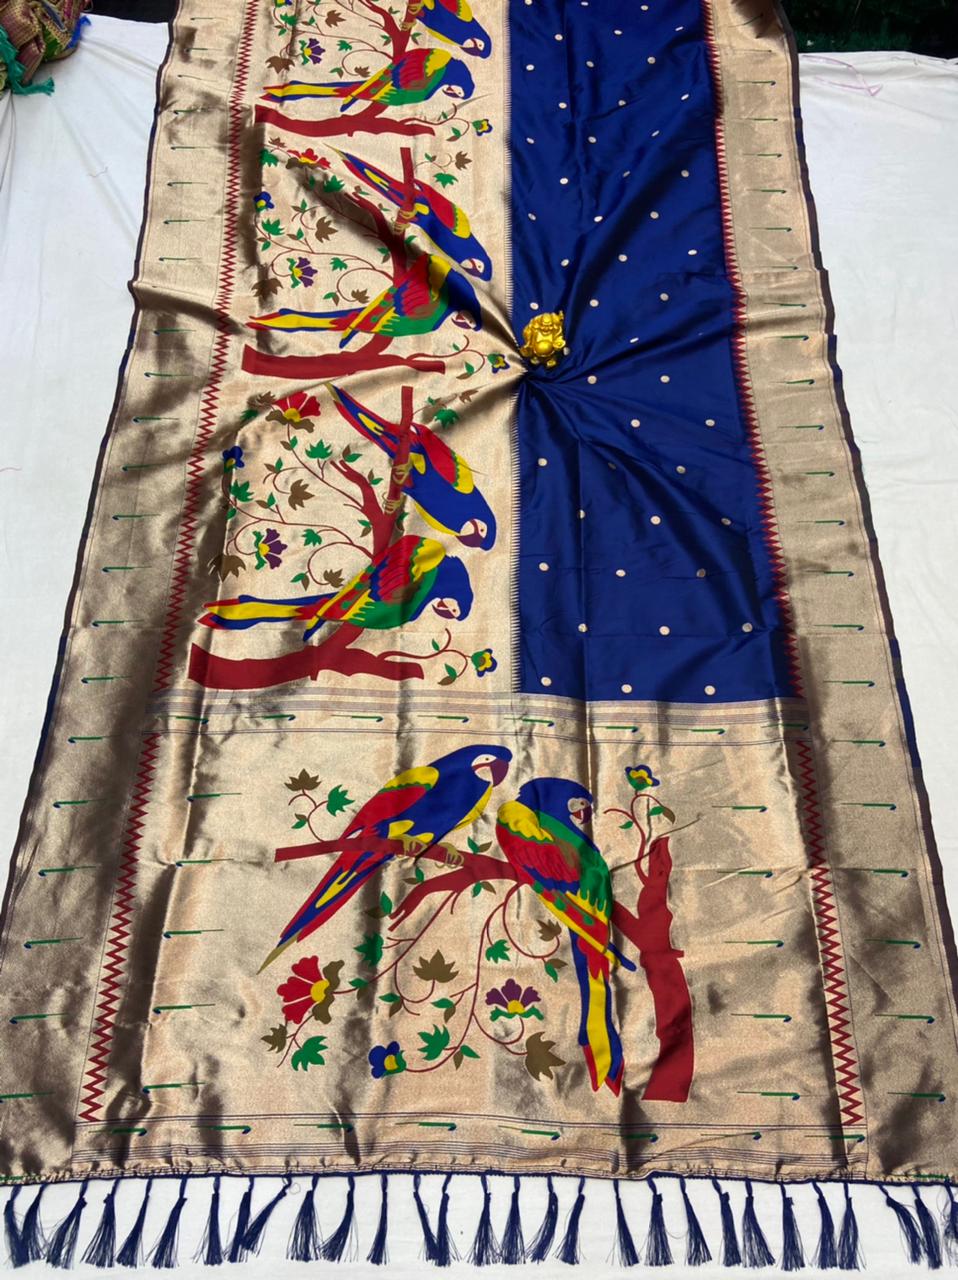 Soft paithani  Kanchivaram Semi-silk MINAKARI DESIGN  AND MINAKARI BORDER saree16569N